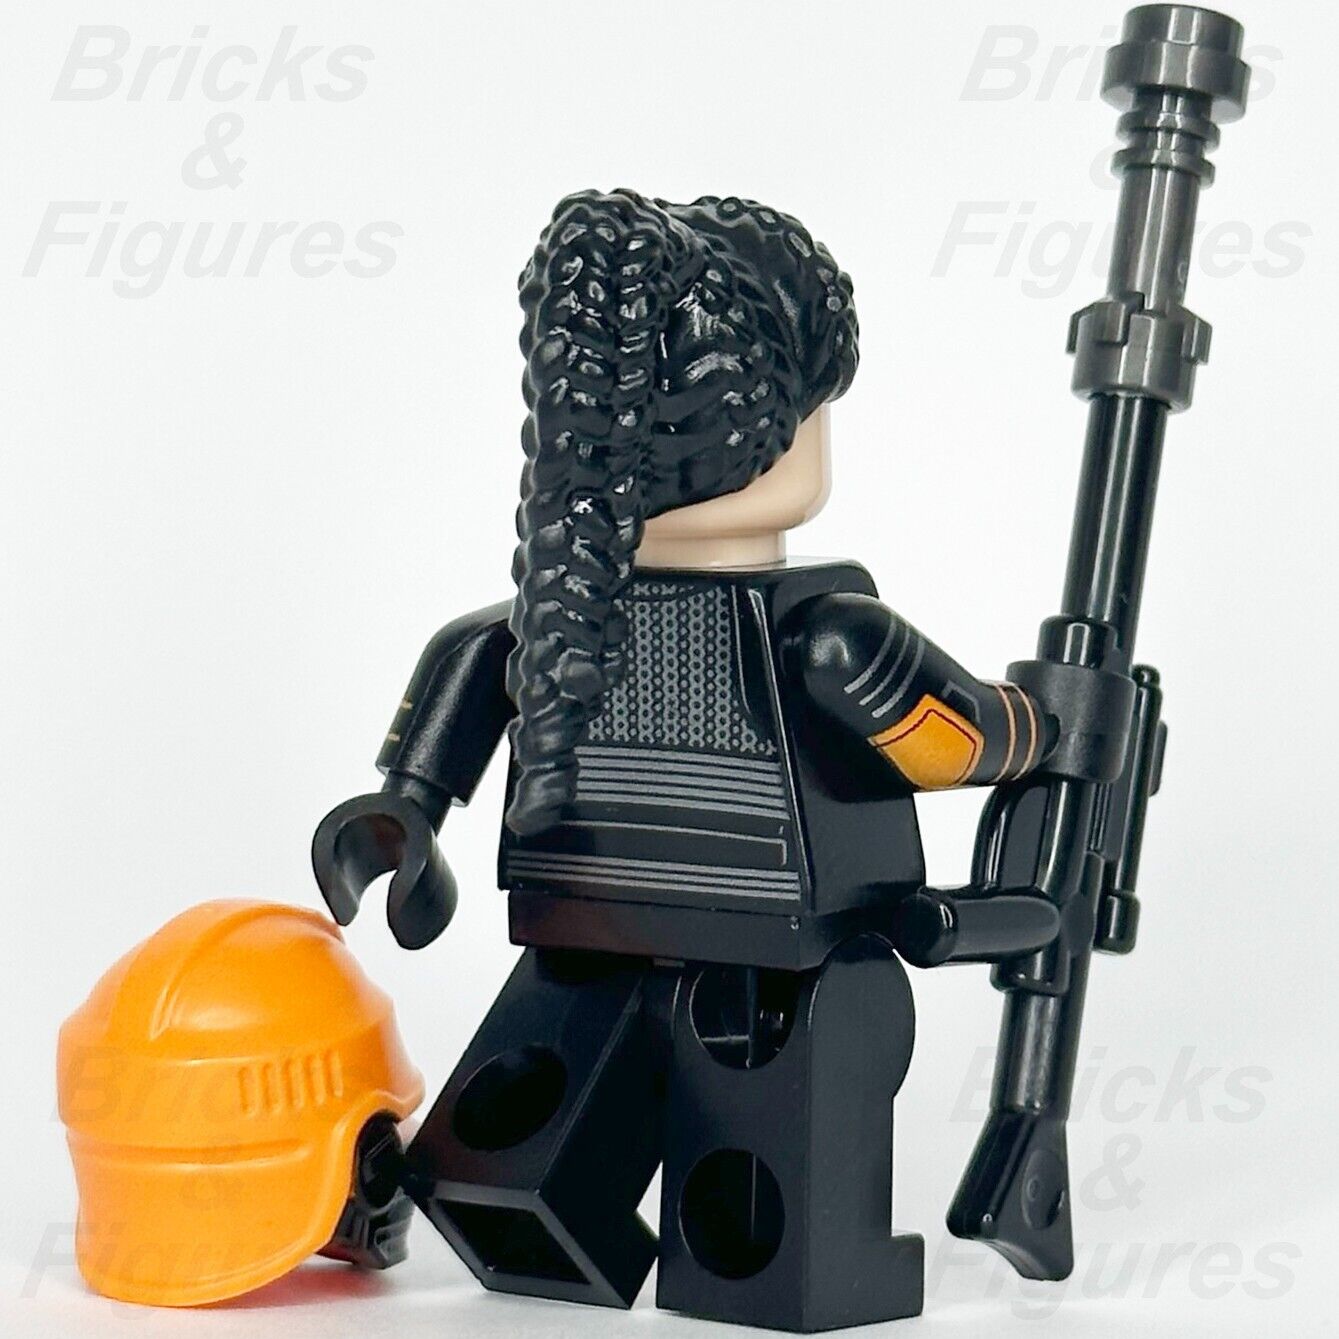 LEGO Star Wars Fennec Shand Minifigure Assassin The Mandalorian 75315 sw1159 3